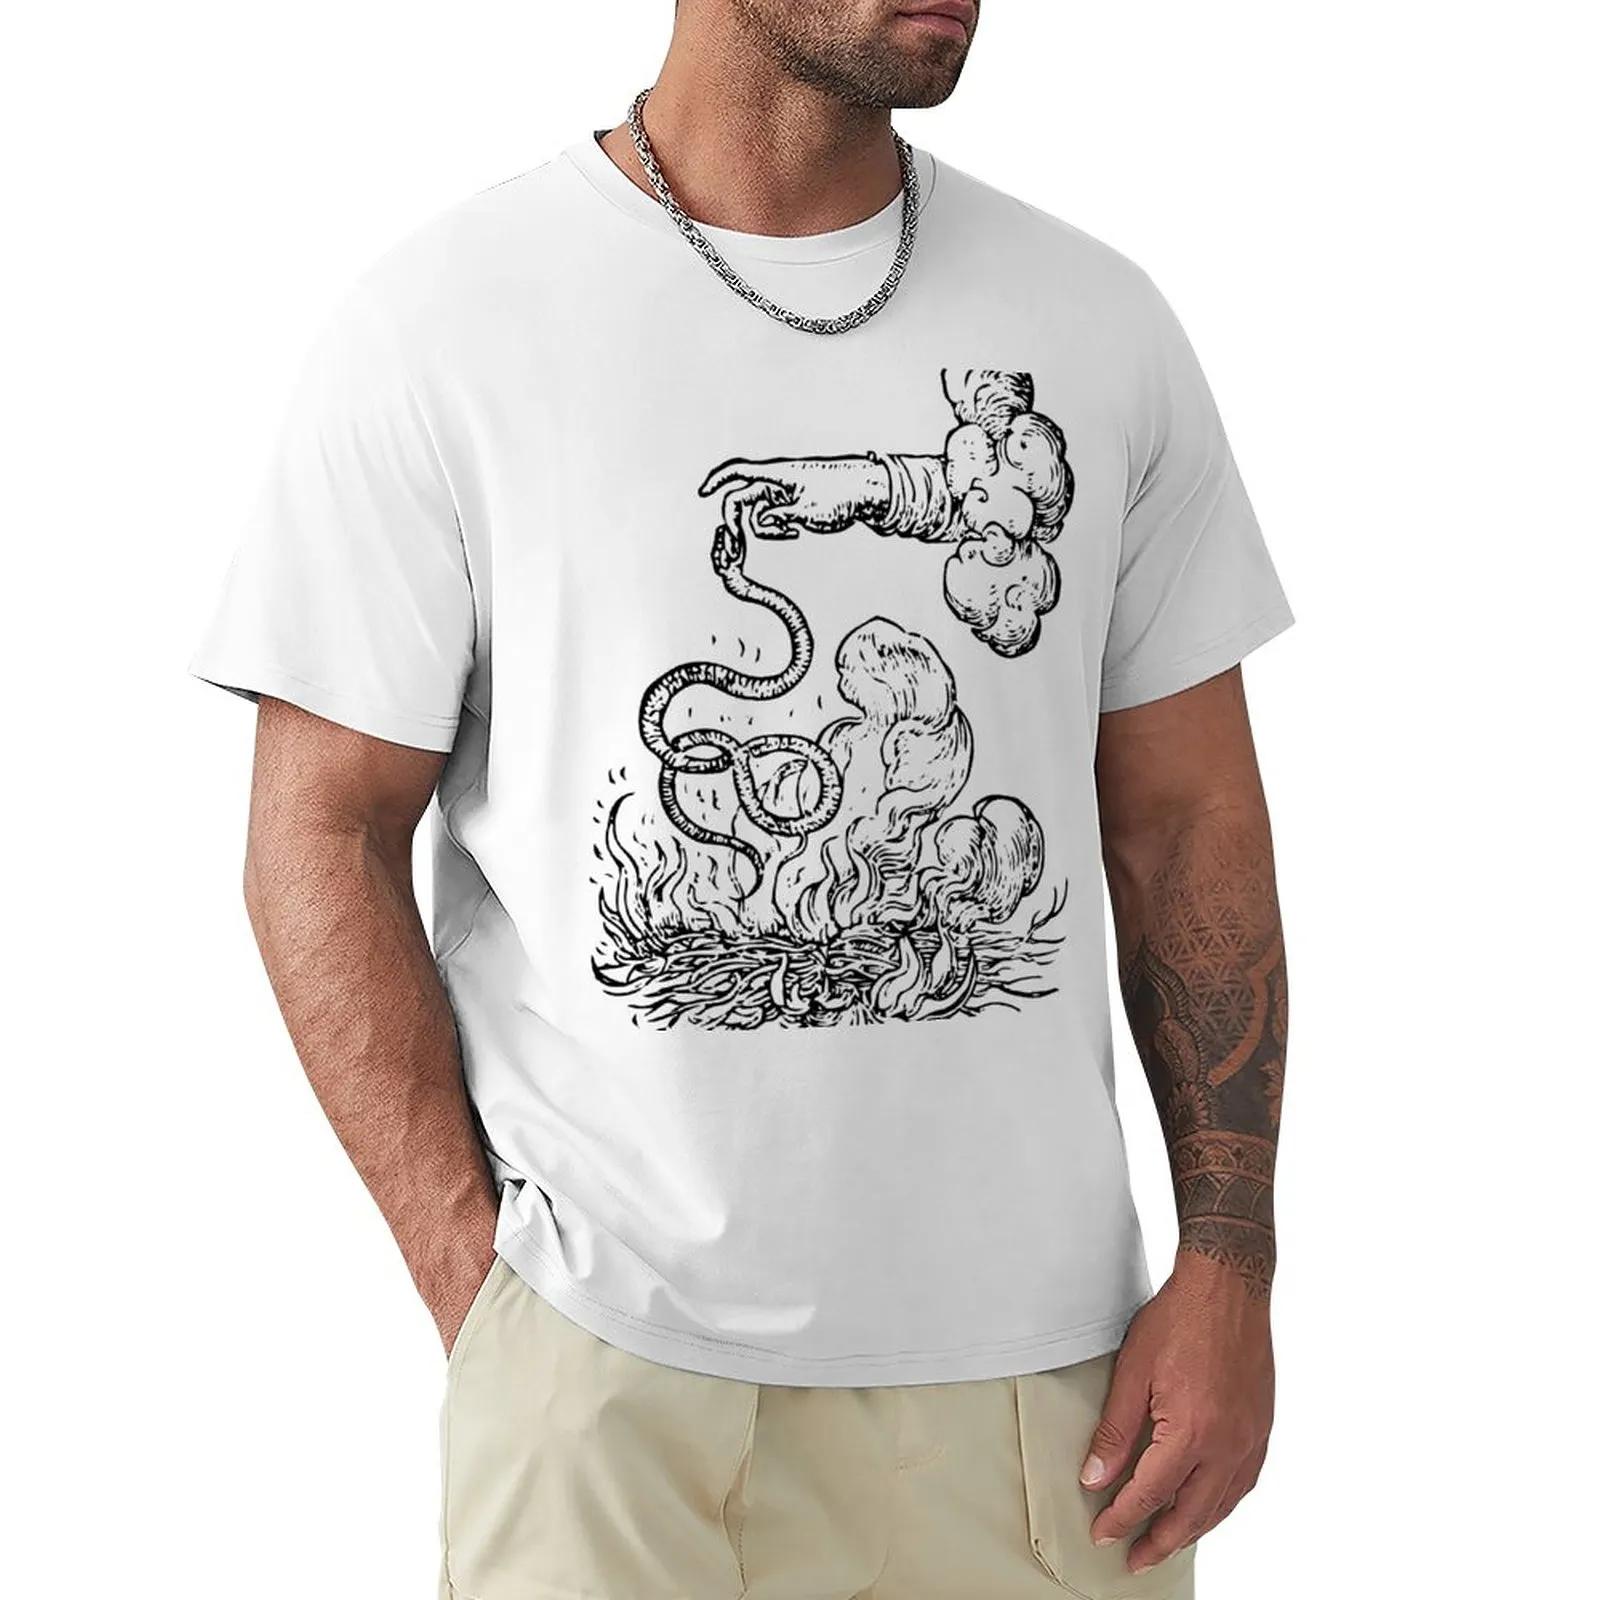 Devises Hero-Ques-The Snake (블랙) 오버사이즈 티셔츠, 커스텀 티셔츠, 남성용 오버사이즈 티셔츠